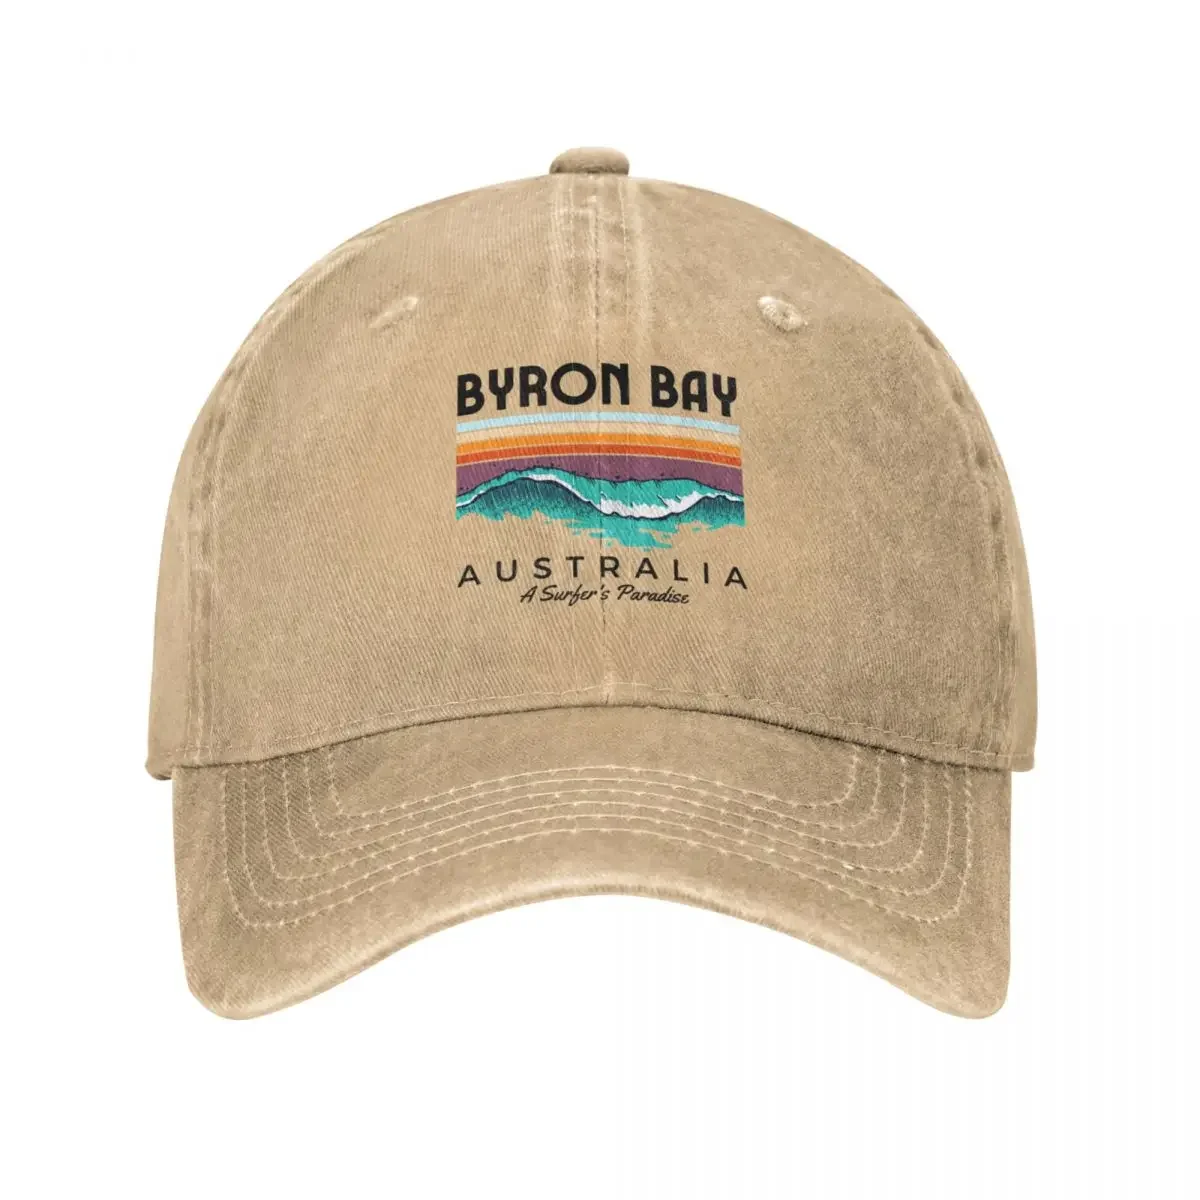 

2023 New Byron Bay Australia A Surfer's Paradise Cap Cowboy Hat Hood Women Beach Fashion Men's